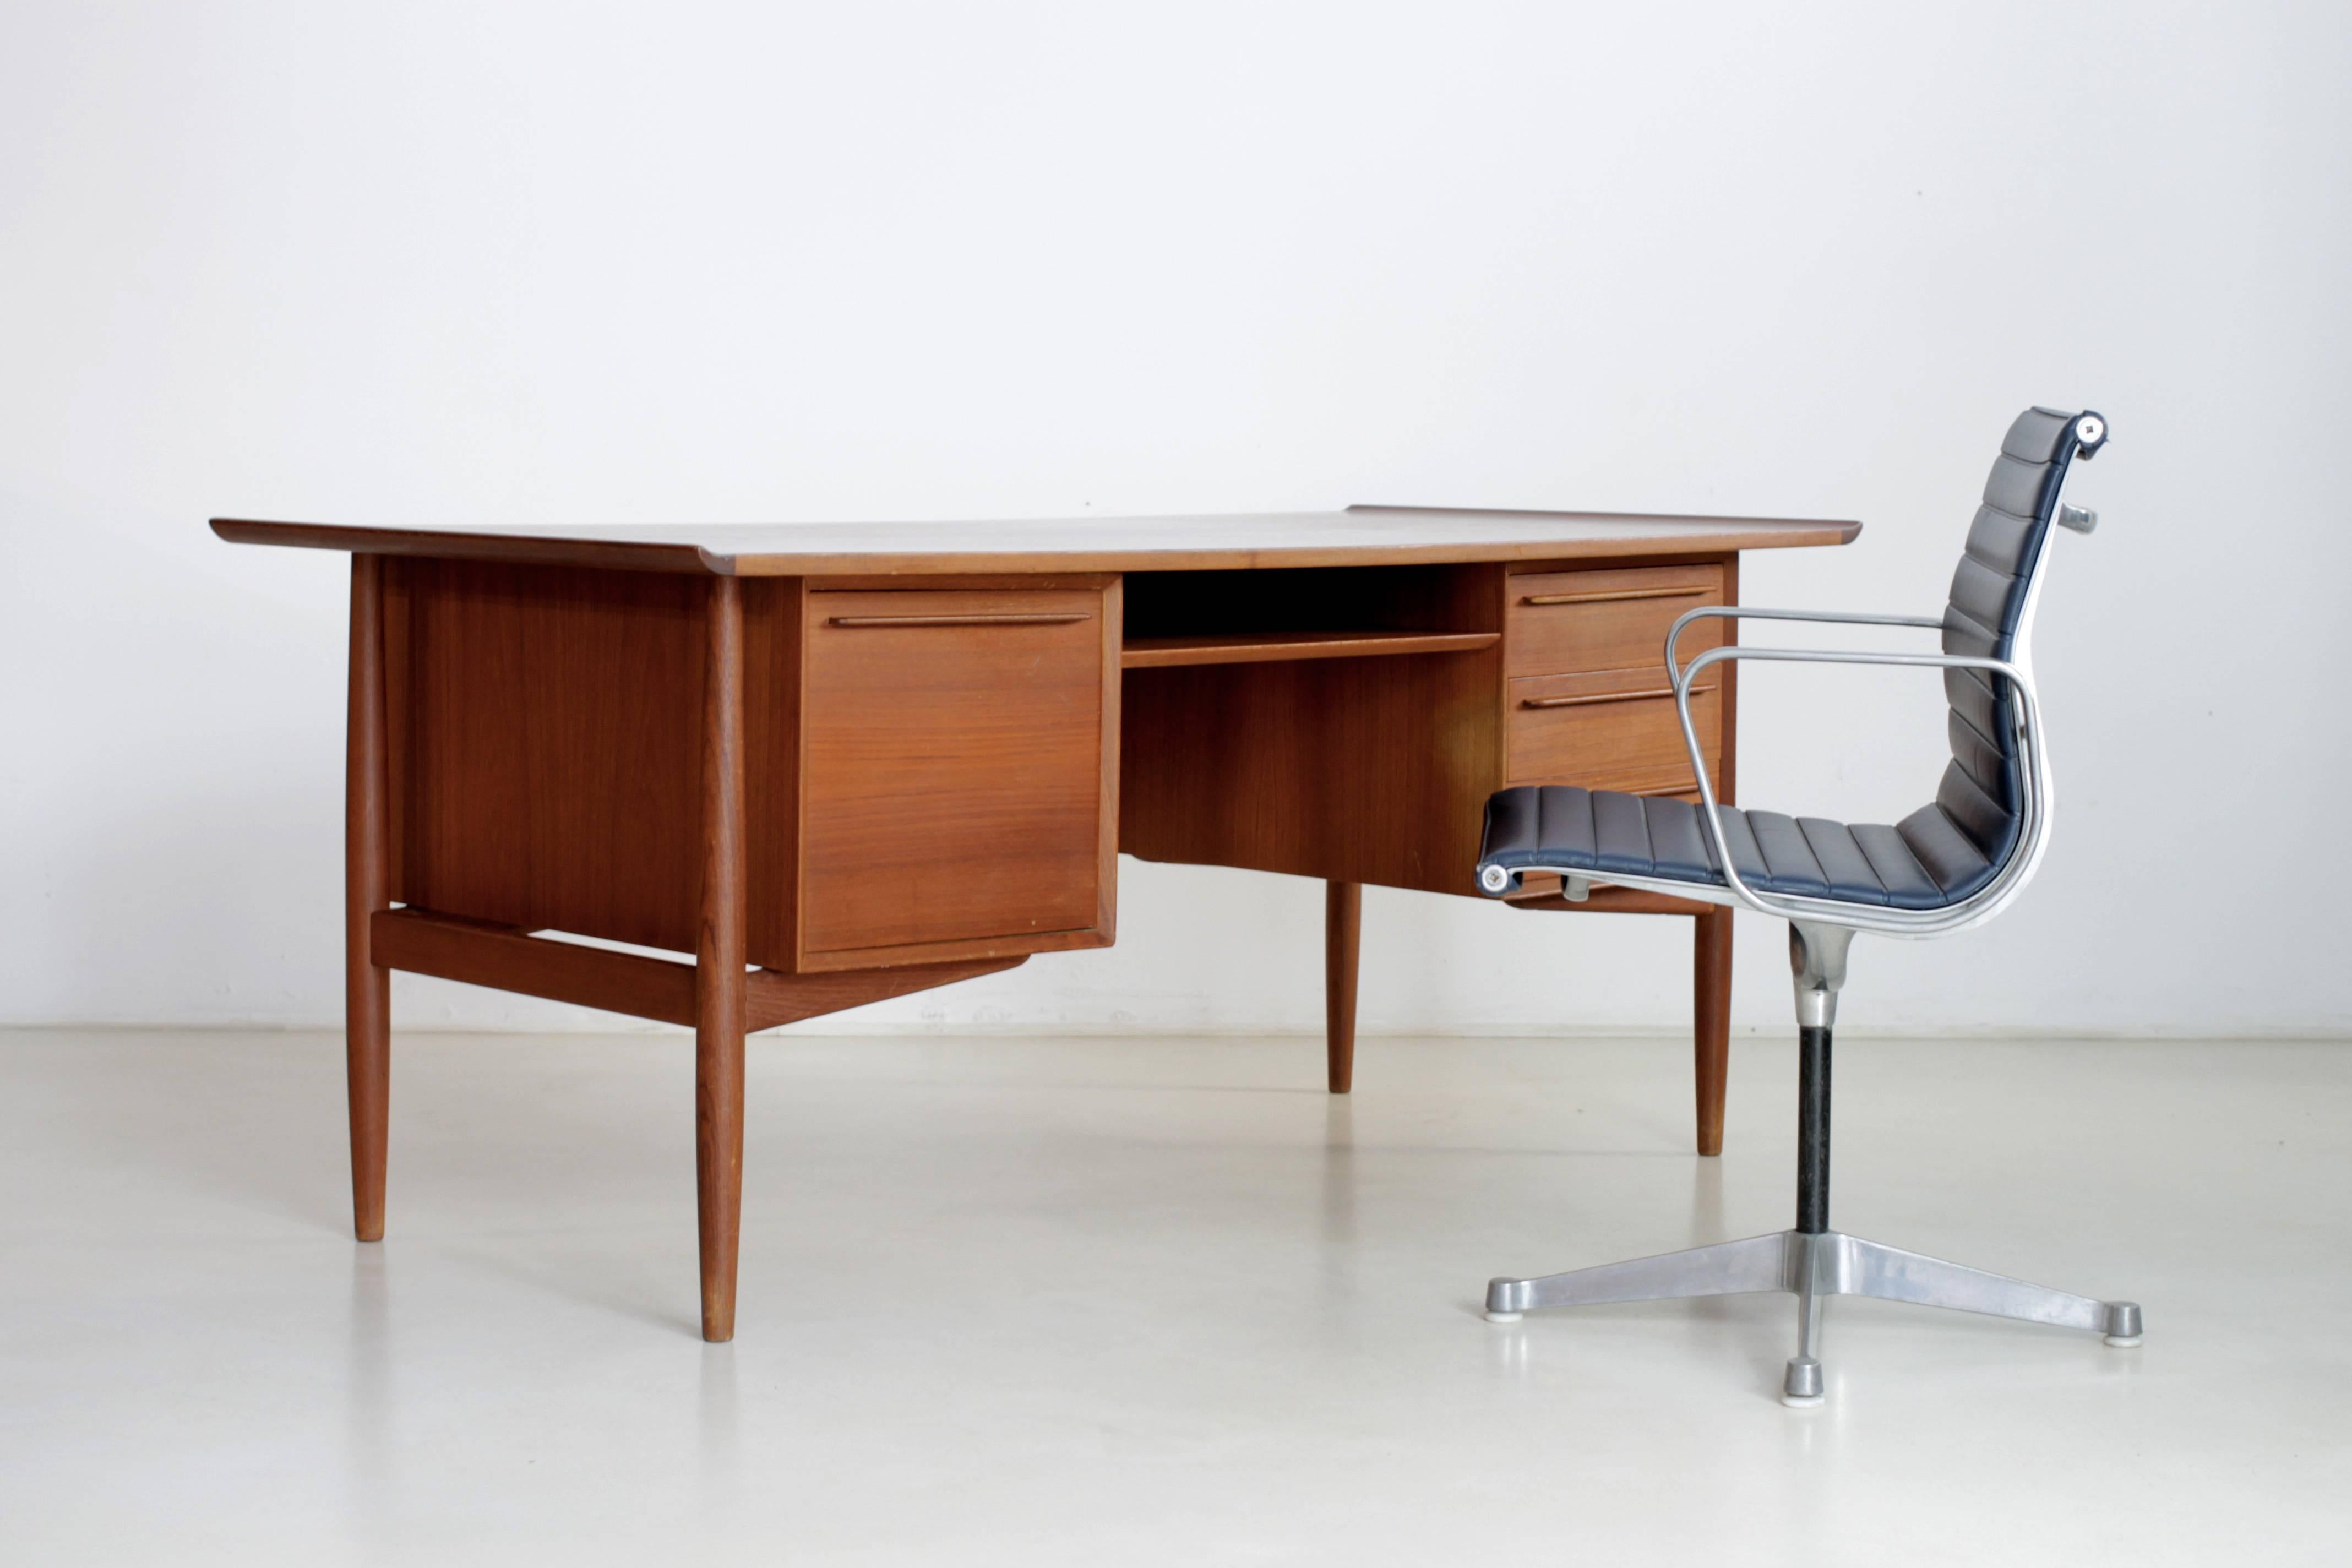 Elegant Danish teak desk designed by Arne Vodder and manufactured by H. P. Hansen in Denmark. Small wear on one of the handles.